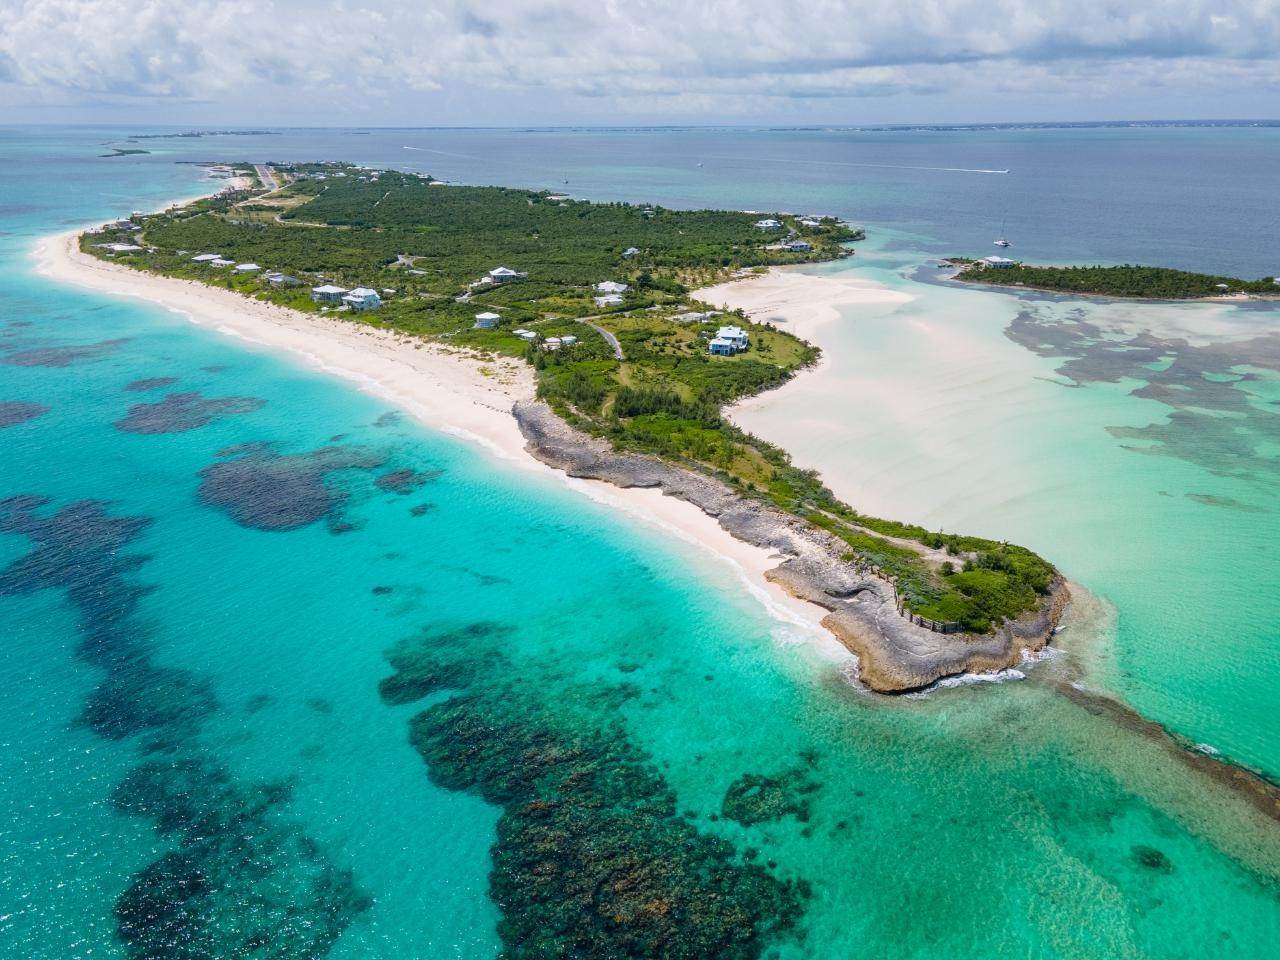 Land for Sale at Scotland Cay, Abaco Bahamas